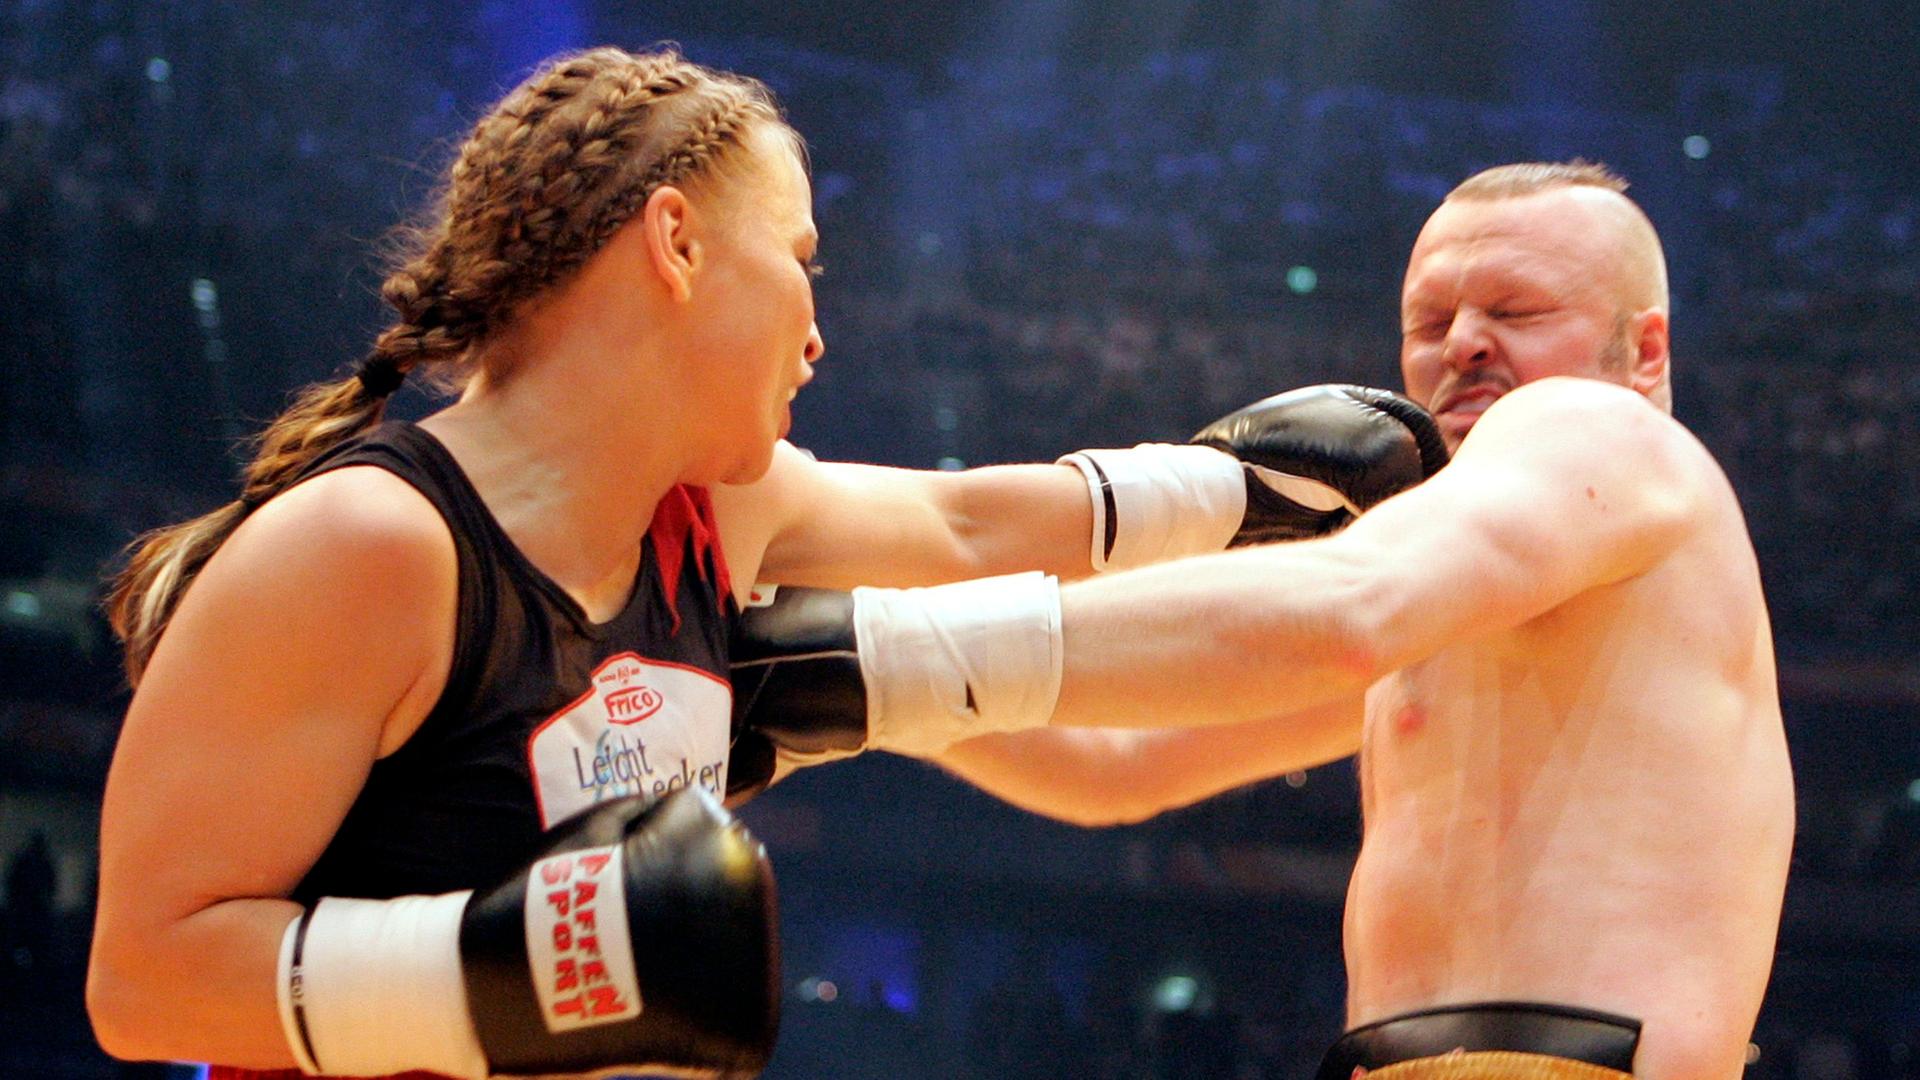 Boxkampf, Regina Halmich gegen Stefan Raab - 2007